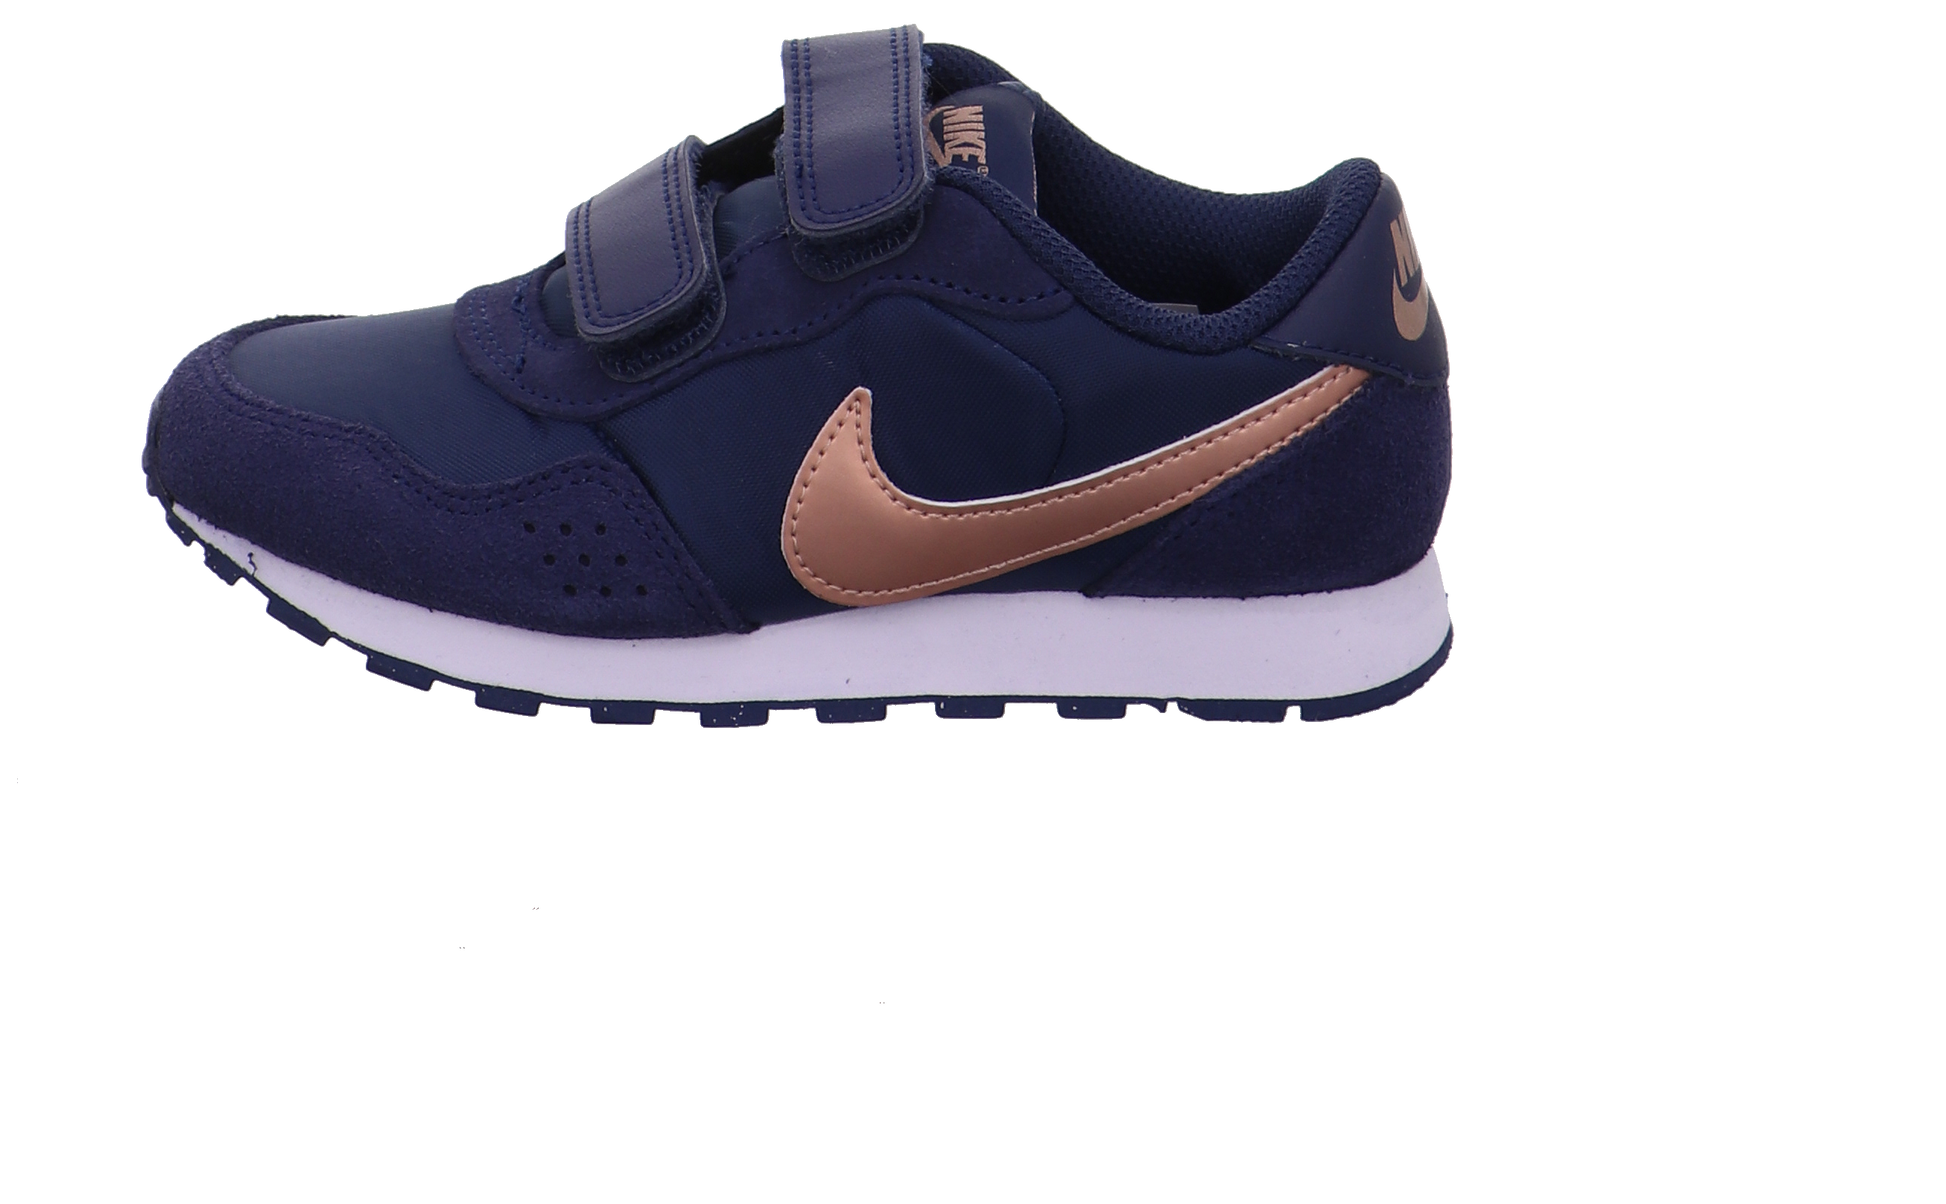 Nike Krabbel- und Lauflernschuhe blau kombi Bild1